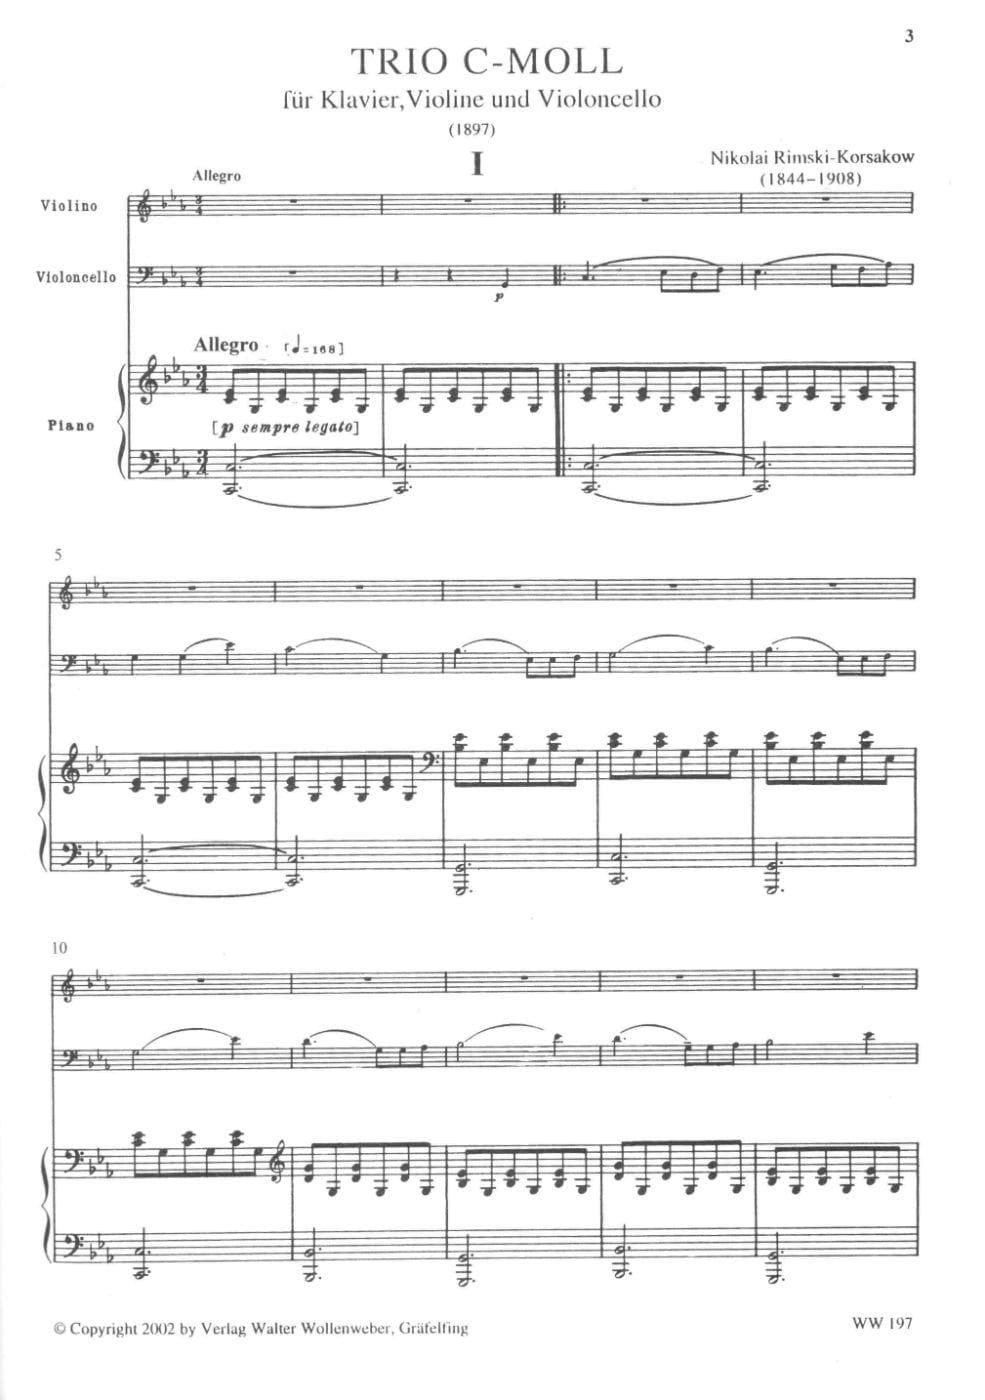 Rimsky-Korsakov, Nikolai - Piano Trio in C Major For Violin, Cello, and Piano Peters Edition